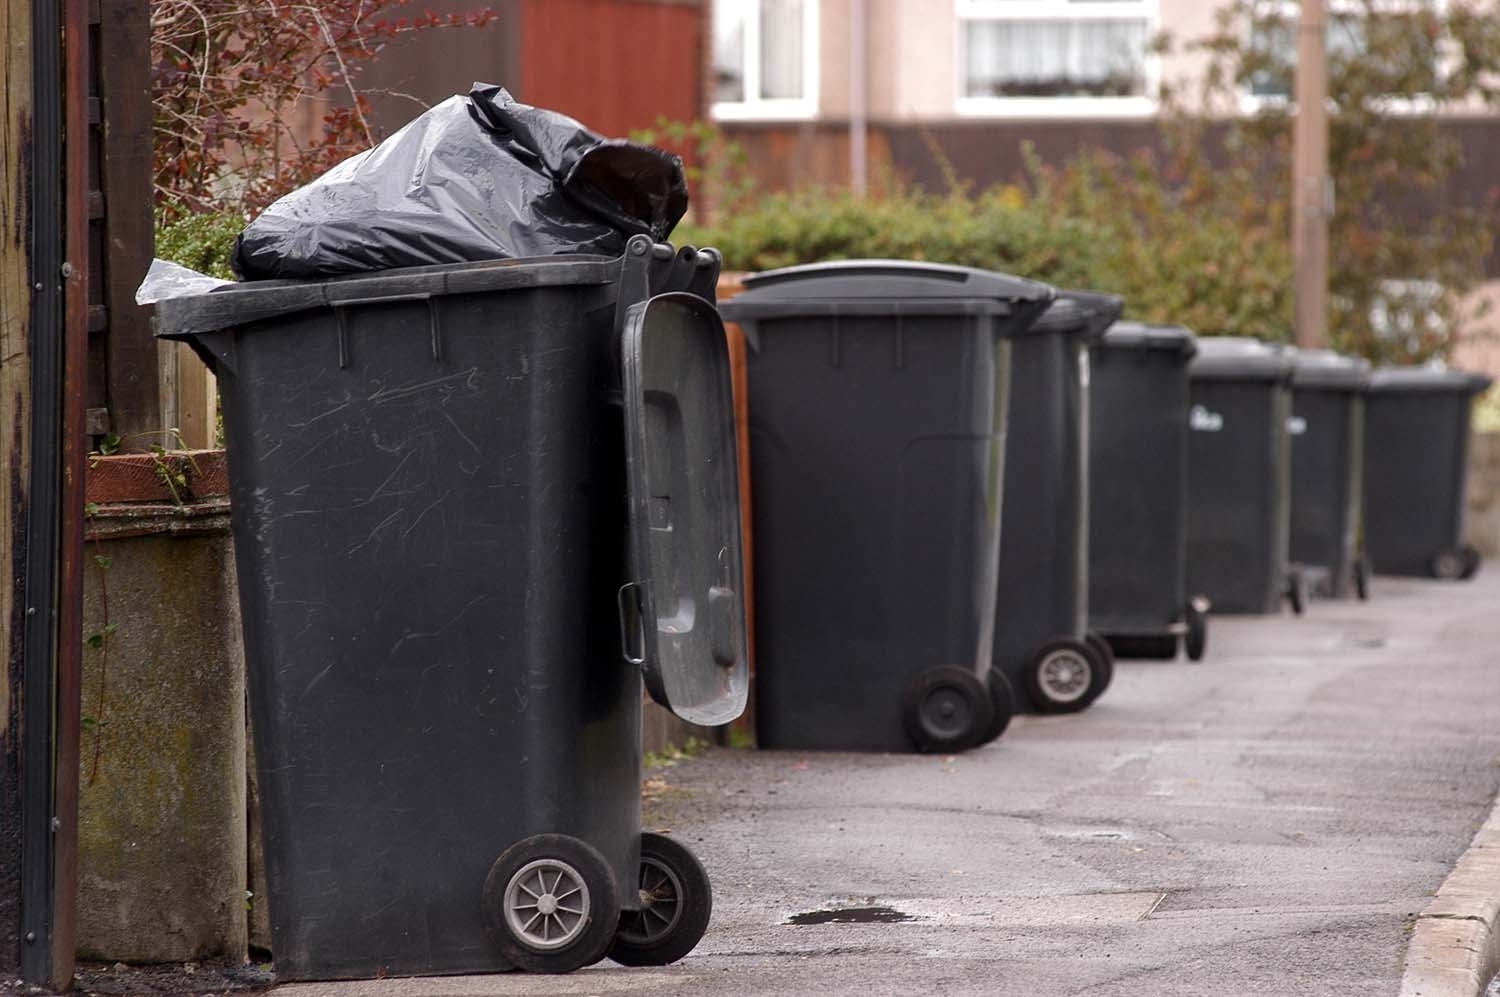 Replacing bins in Bristol has cost hundreds of thousands | Bristol Politics1500 x 997